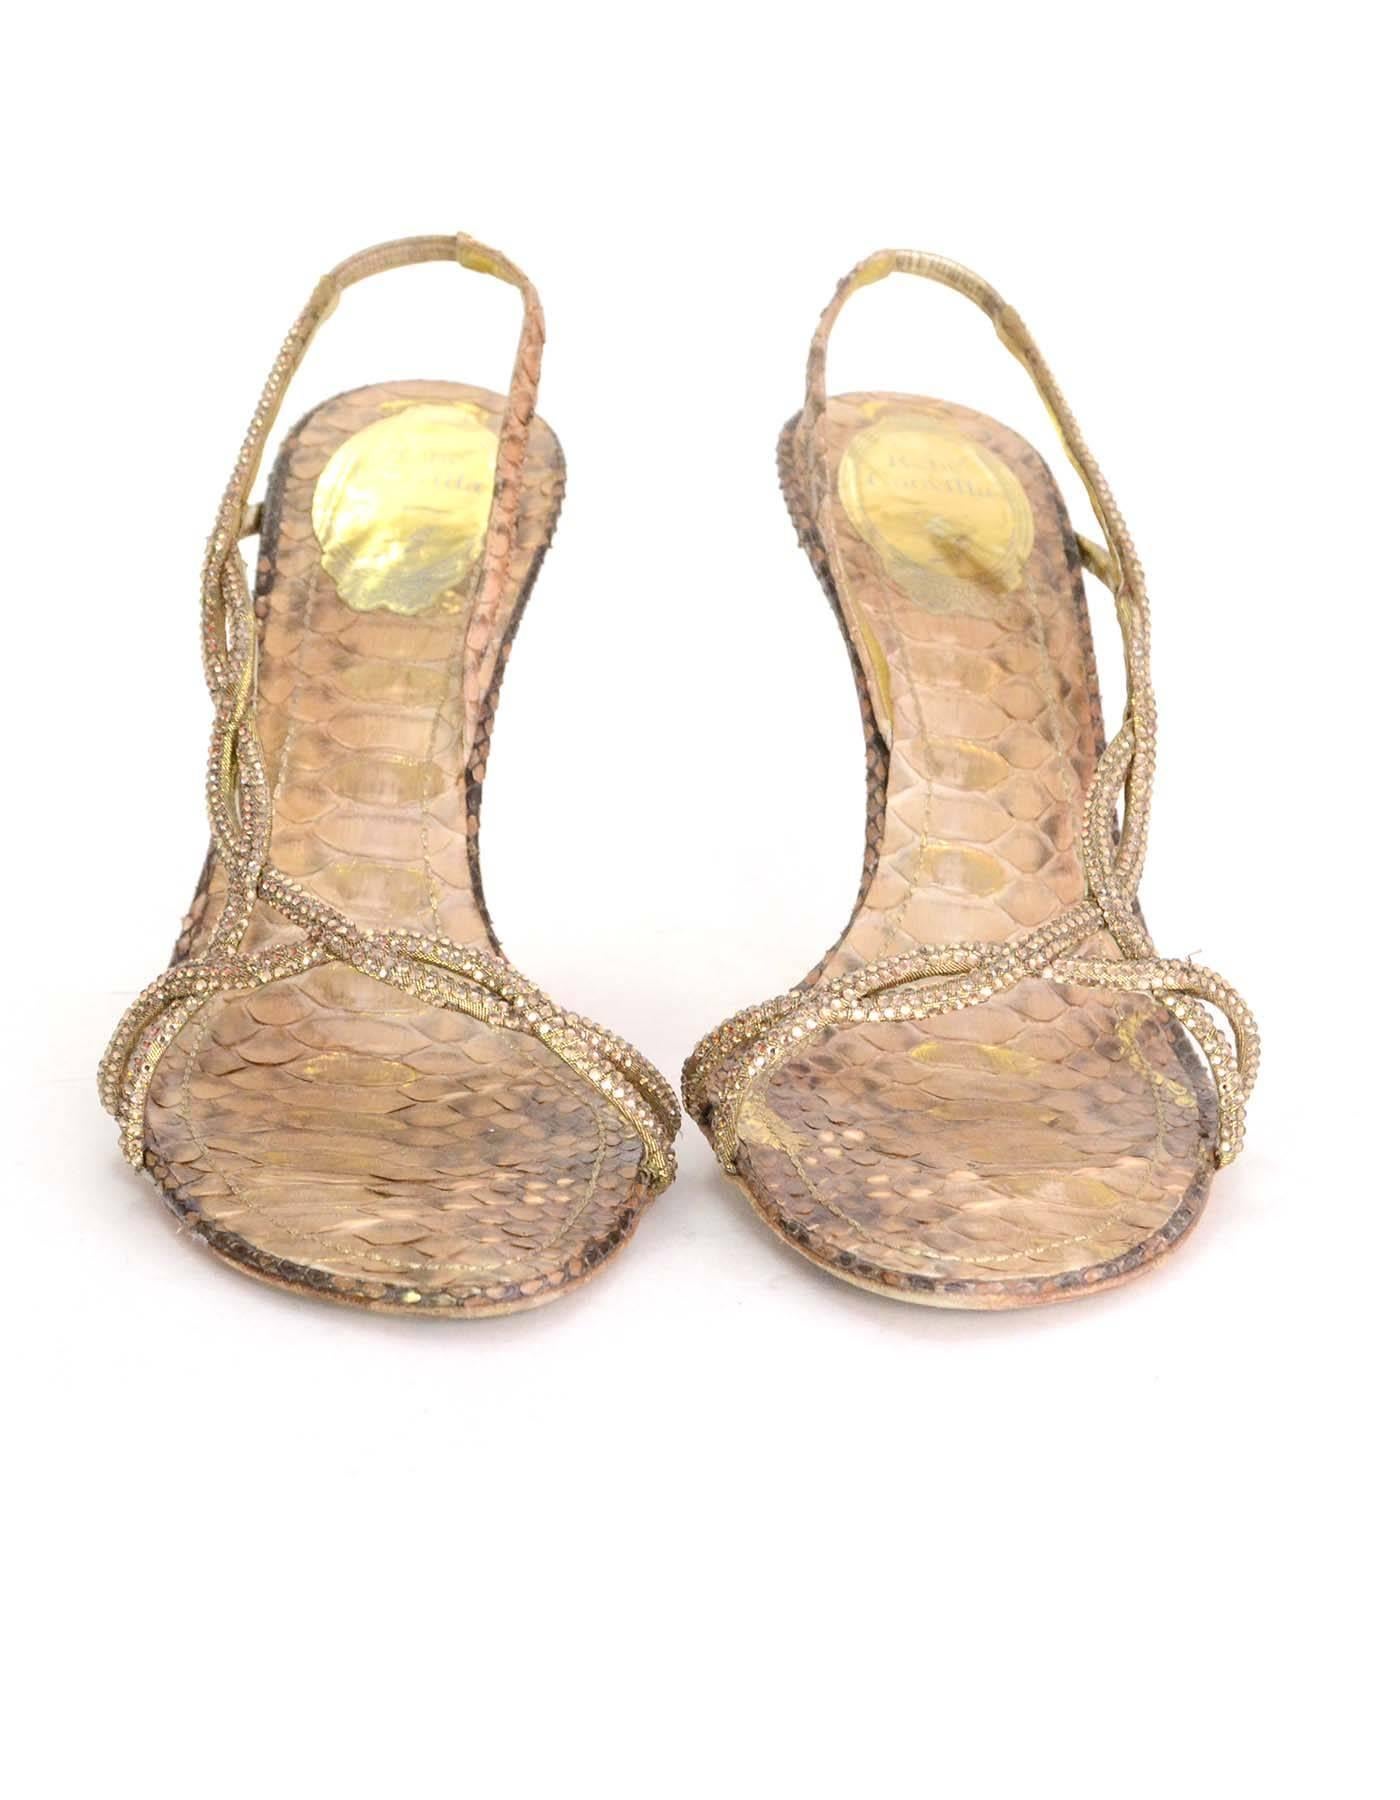 Beige Rene Caovilla Pave Crystal and Snakeskin Sandals Sz 39